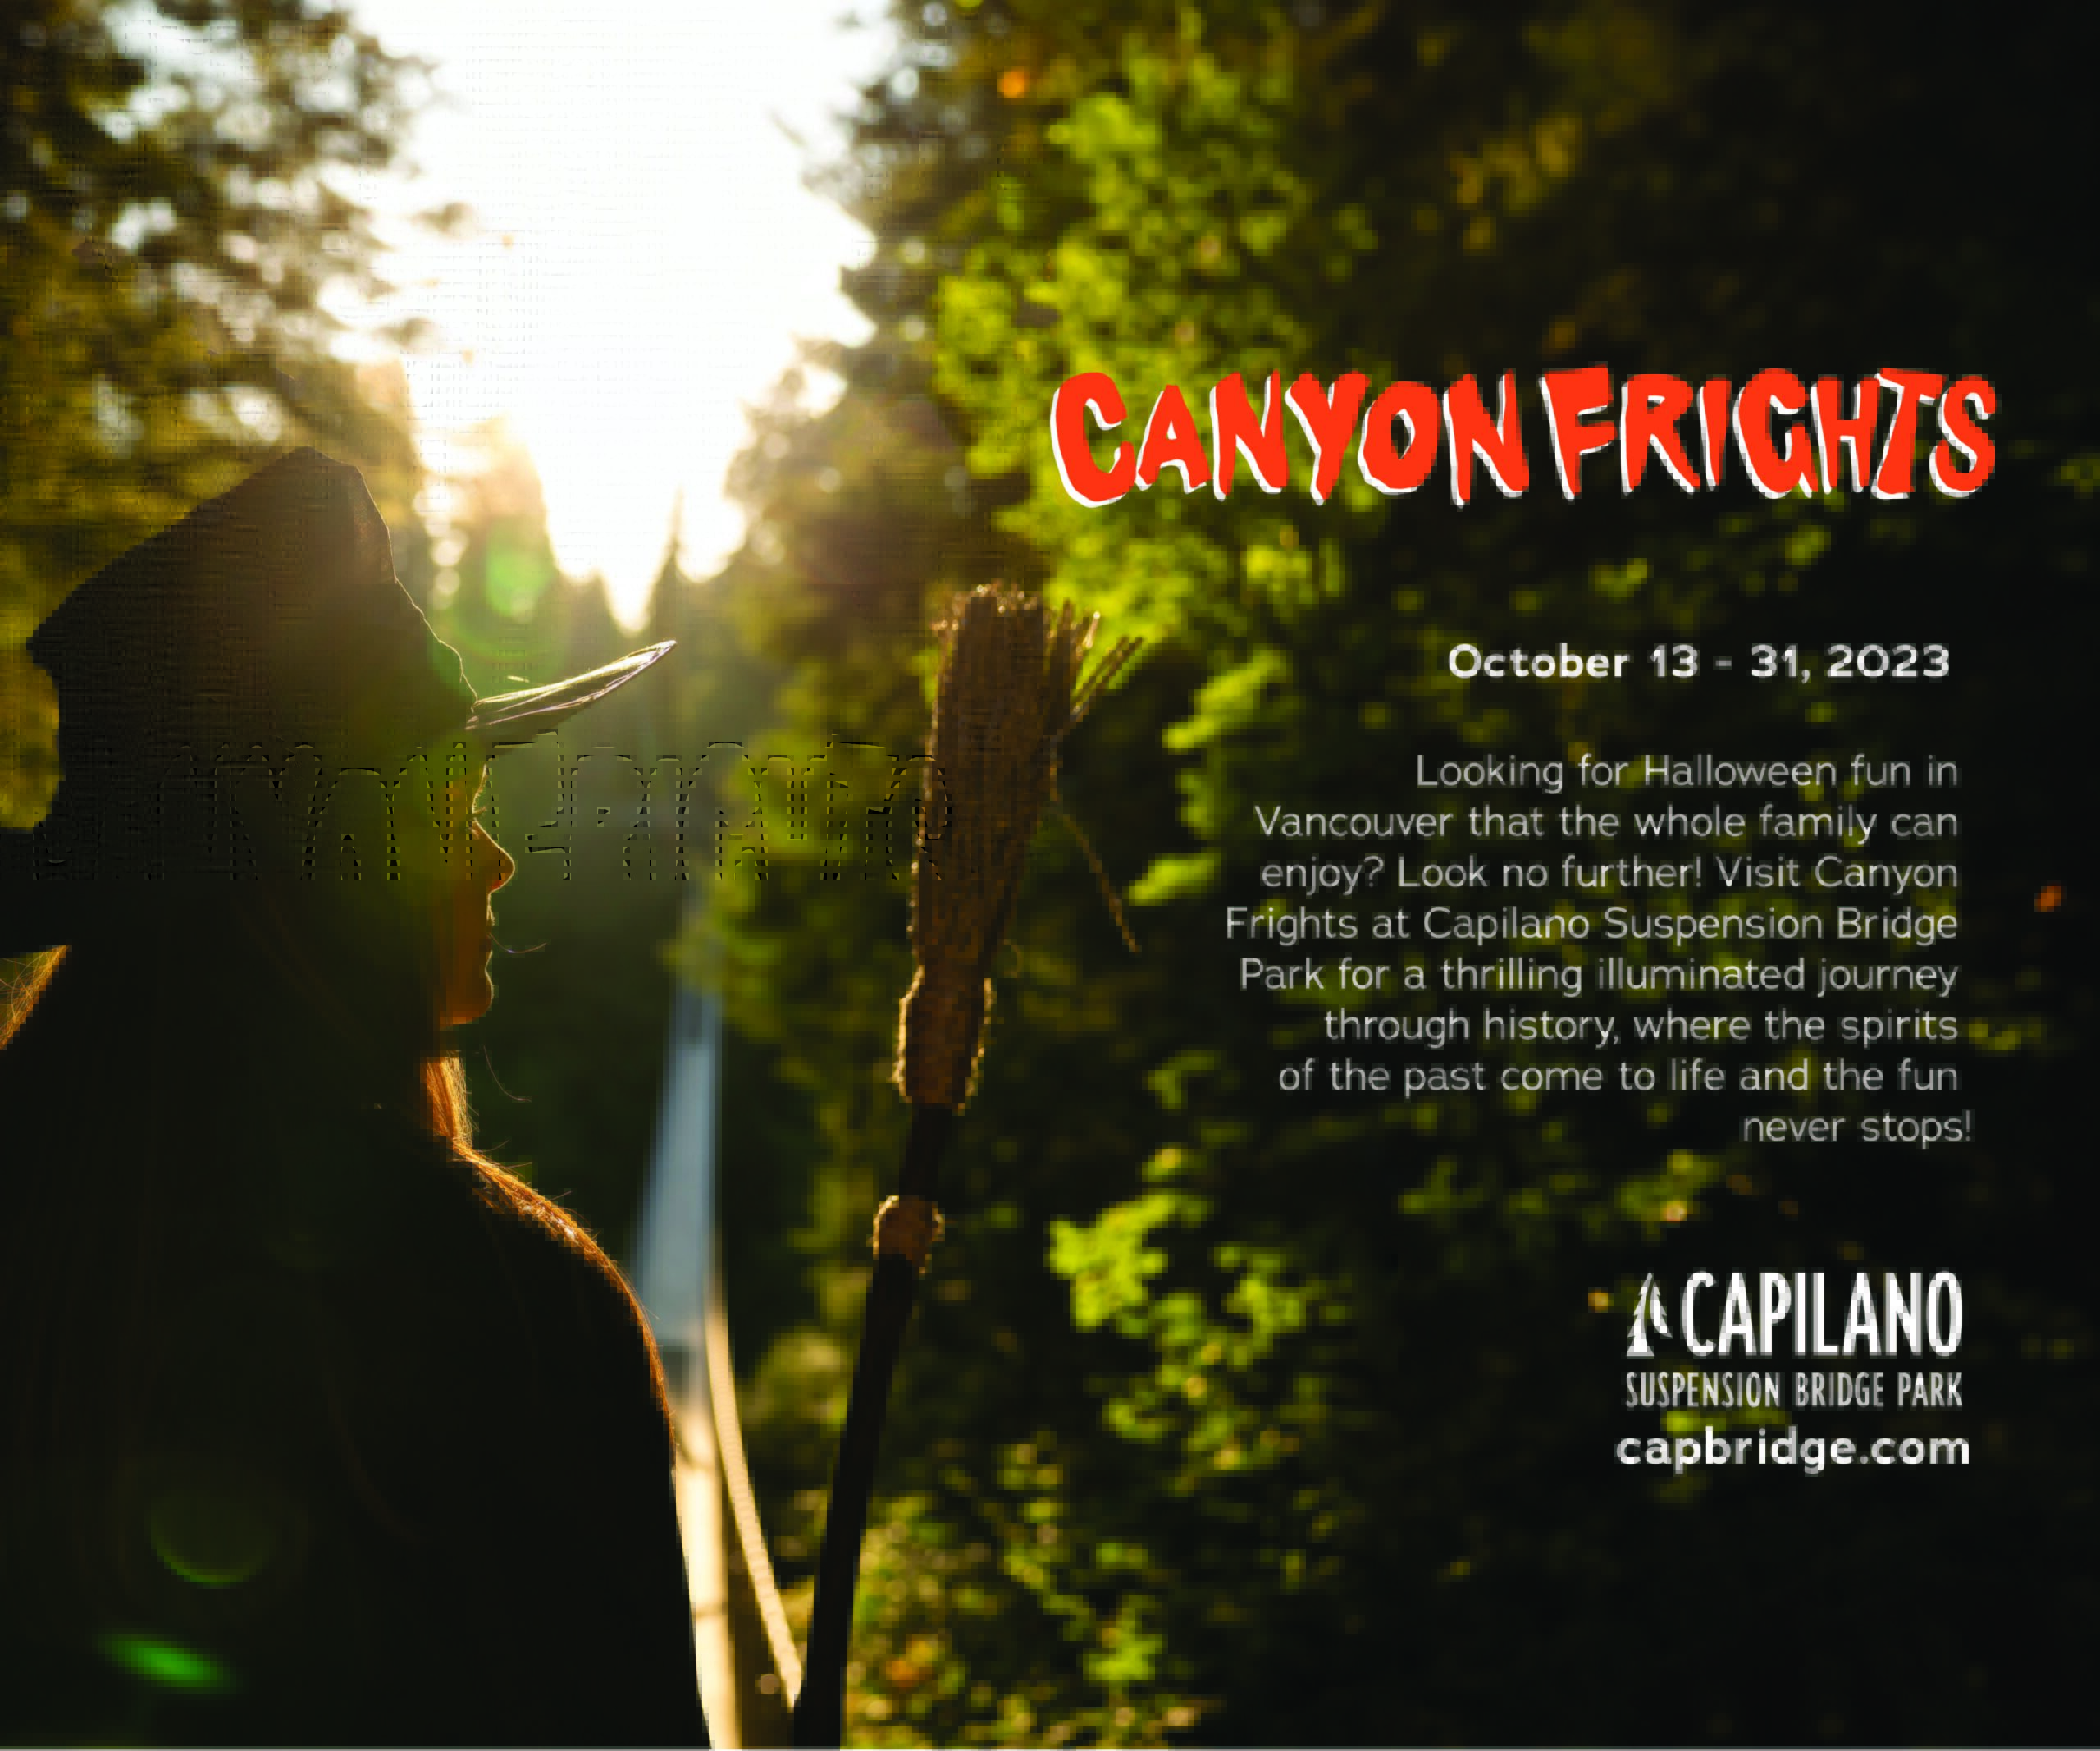 Canyon Frights na ponte suspensa Capilano, Halloween 2023